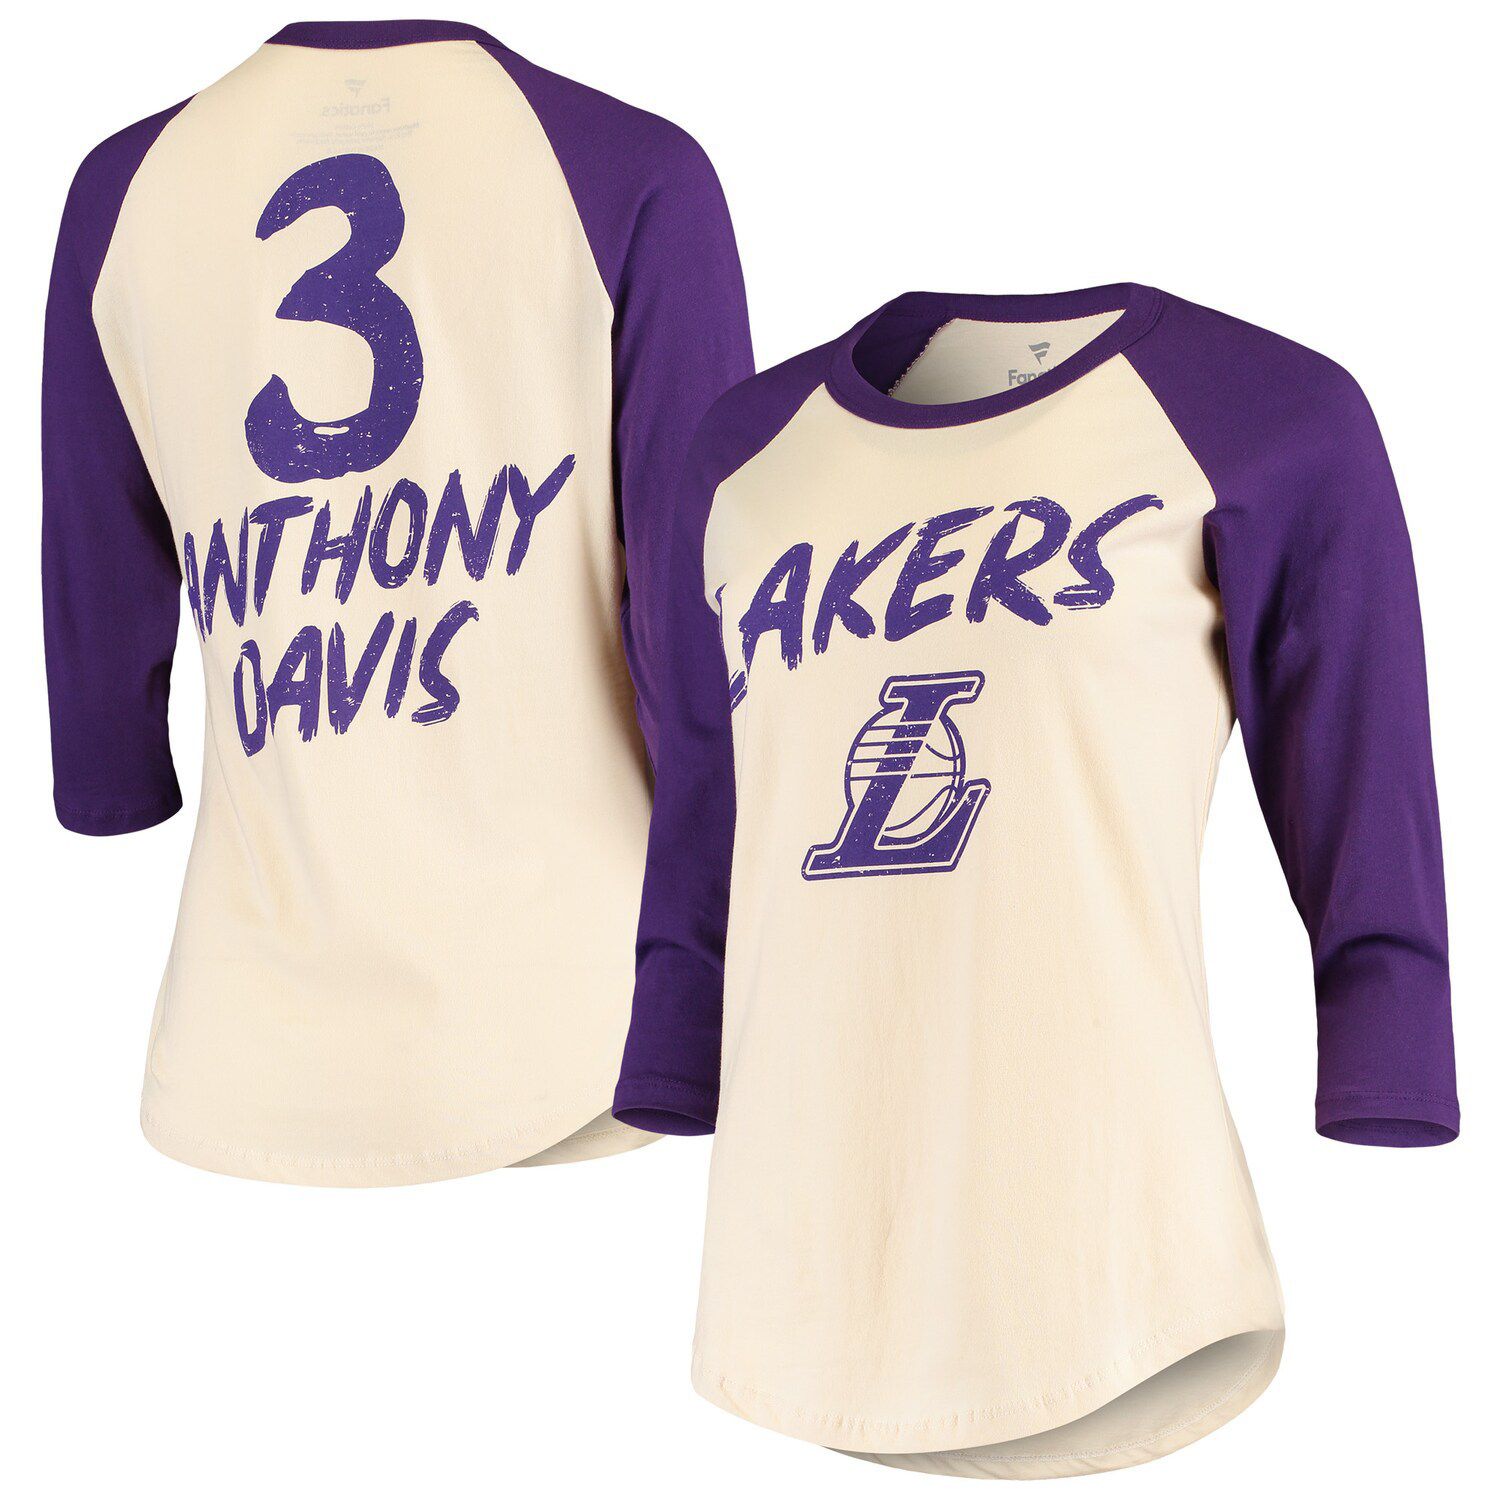 anthony davis women's jersey